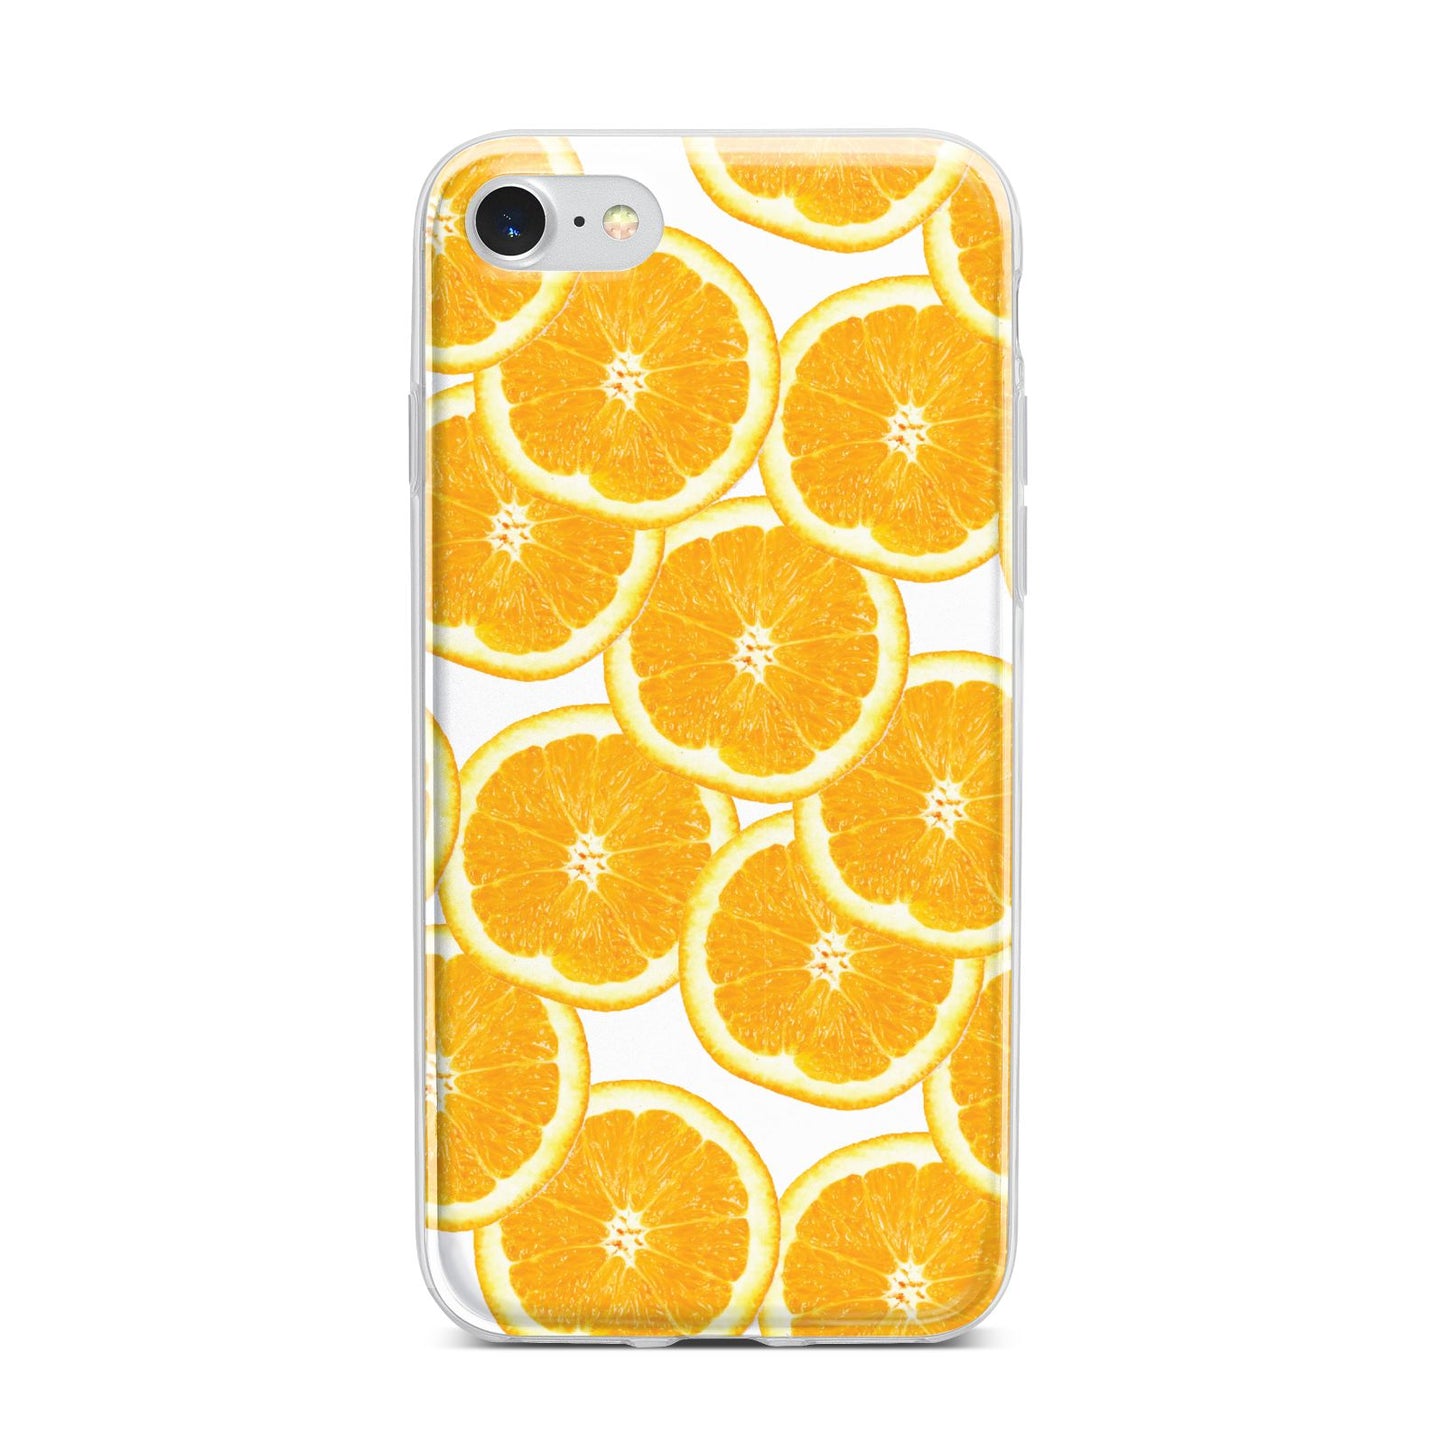 Orange Fruit Slices iPhone 7 Bumper Case on Silver iPhone